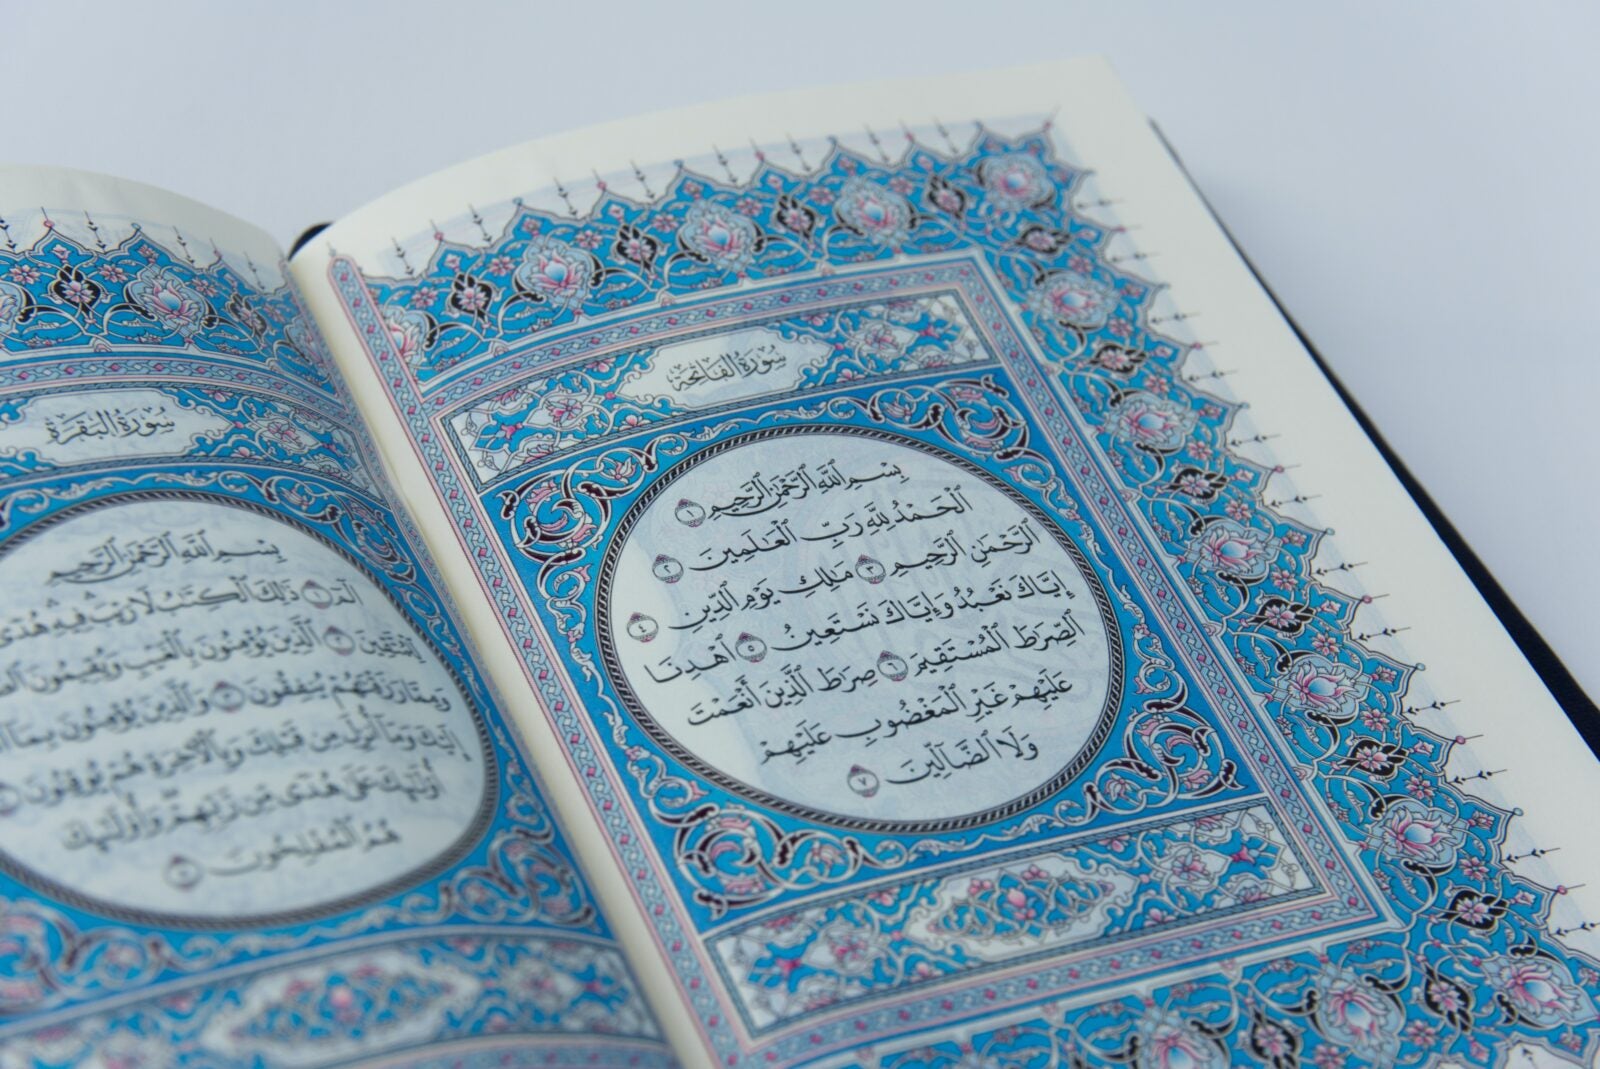 Closeup of the Holy Quran.